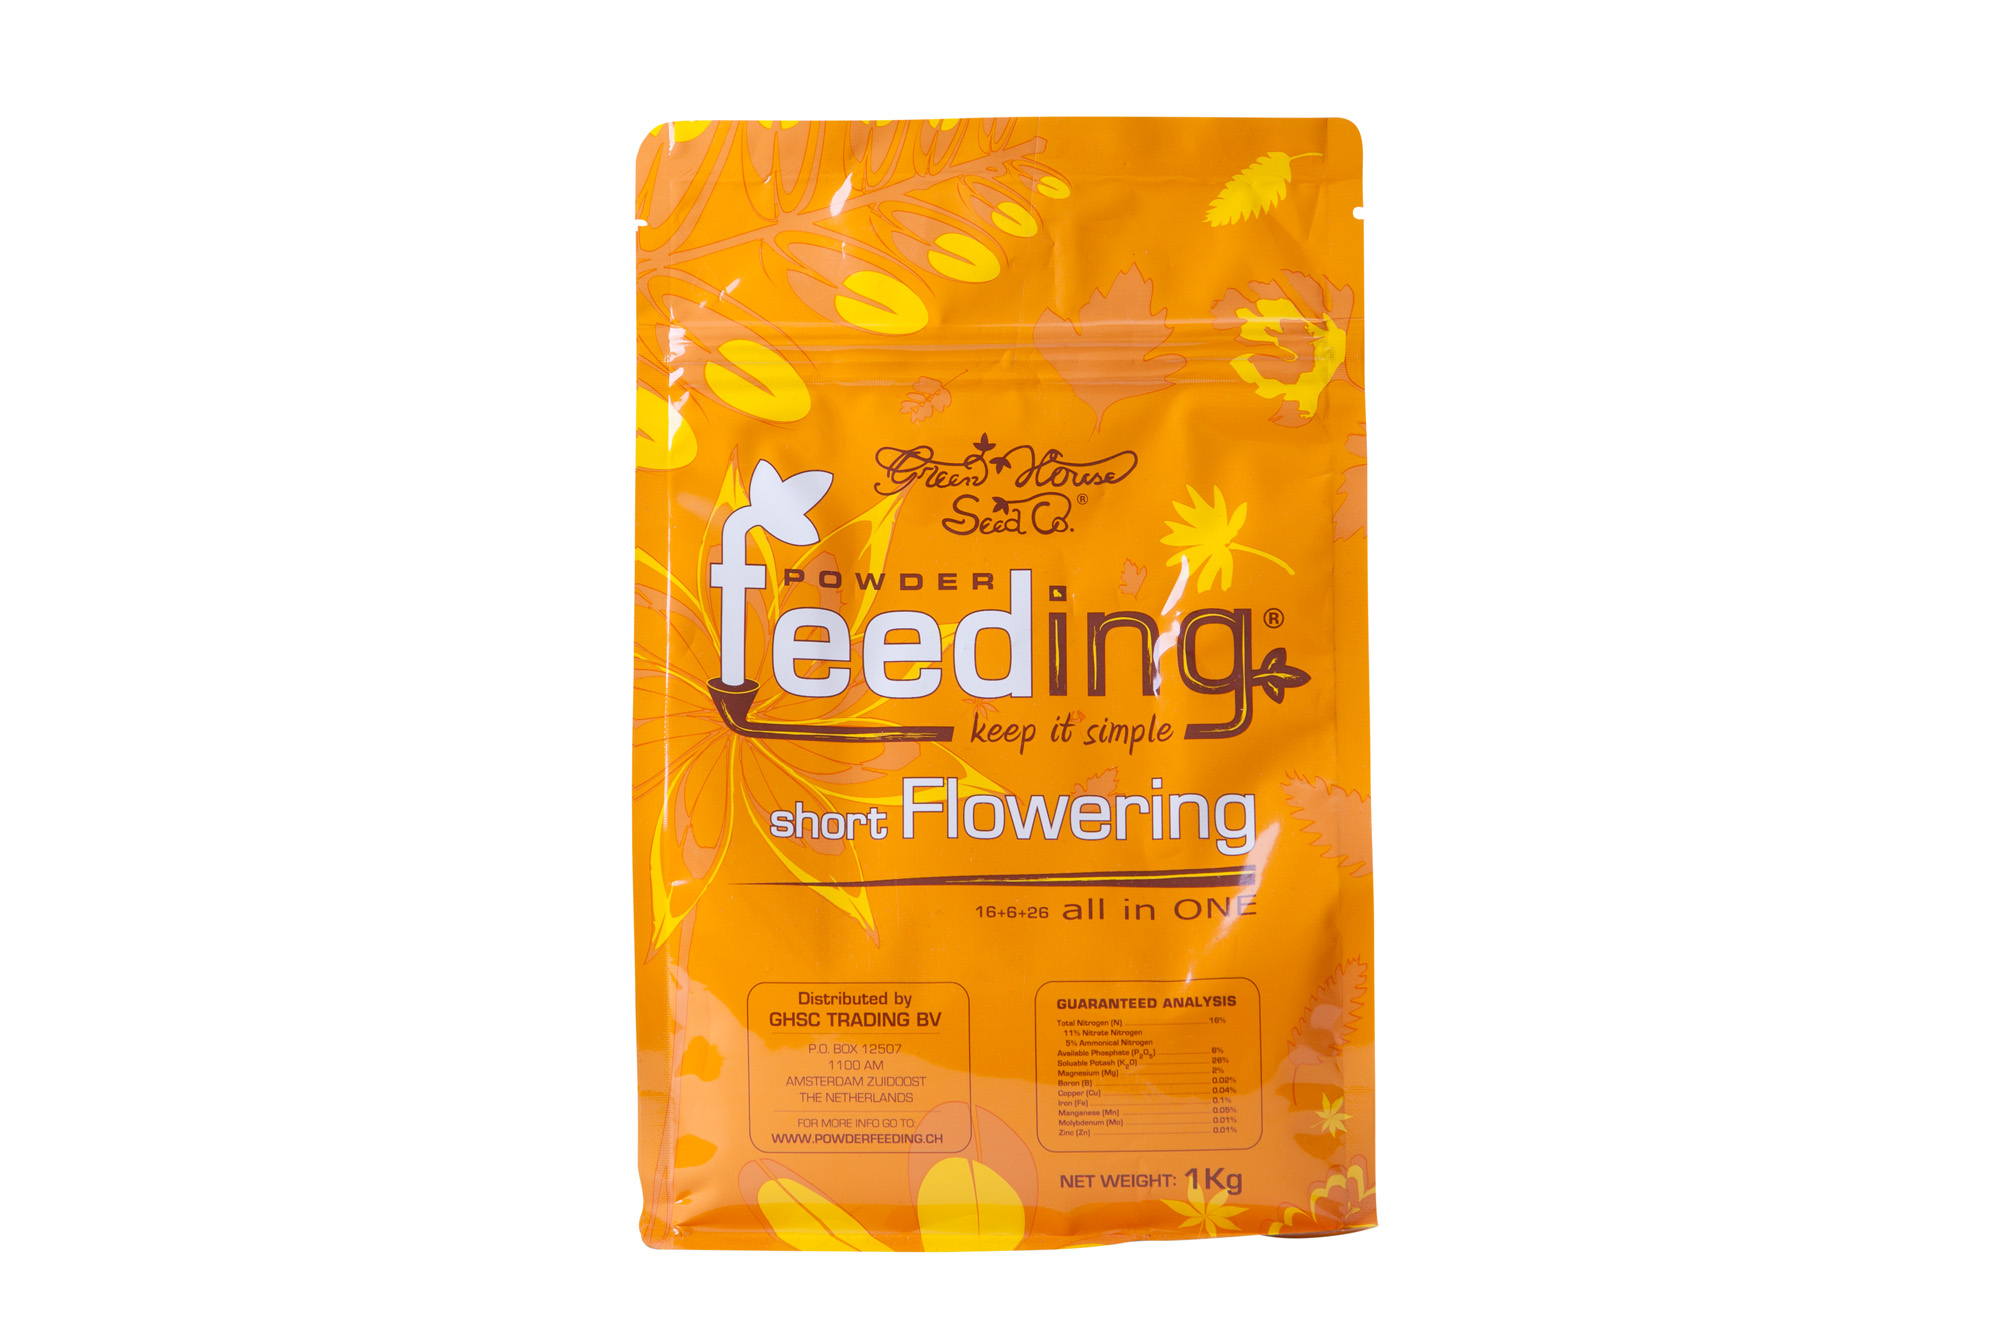 Feeding short. Powder feeding Hybrids 2.5 кг. Powder feeding BIOGROW (1кг). Powder feeding Calcium (1 кг). Удобрение Powder feeding.